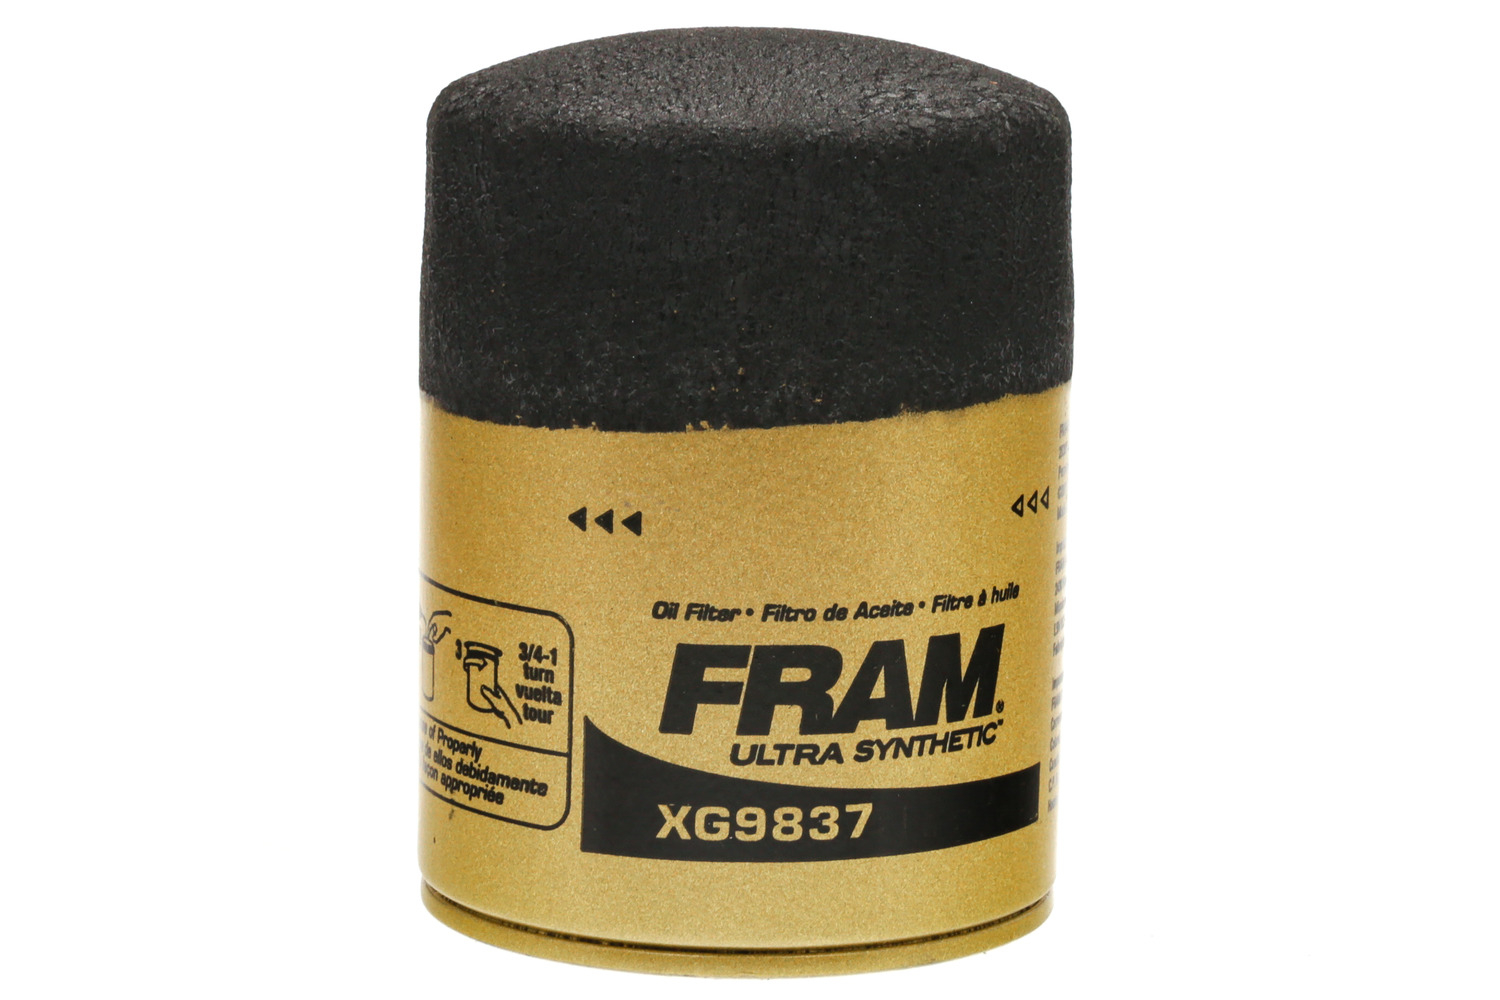 FRAM ULTRA - Ultra Synthetic Engine Oil Filter - FP4 XG9837